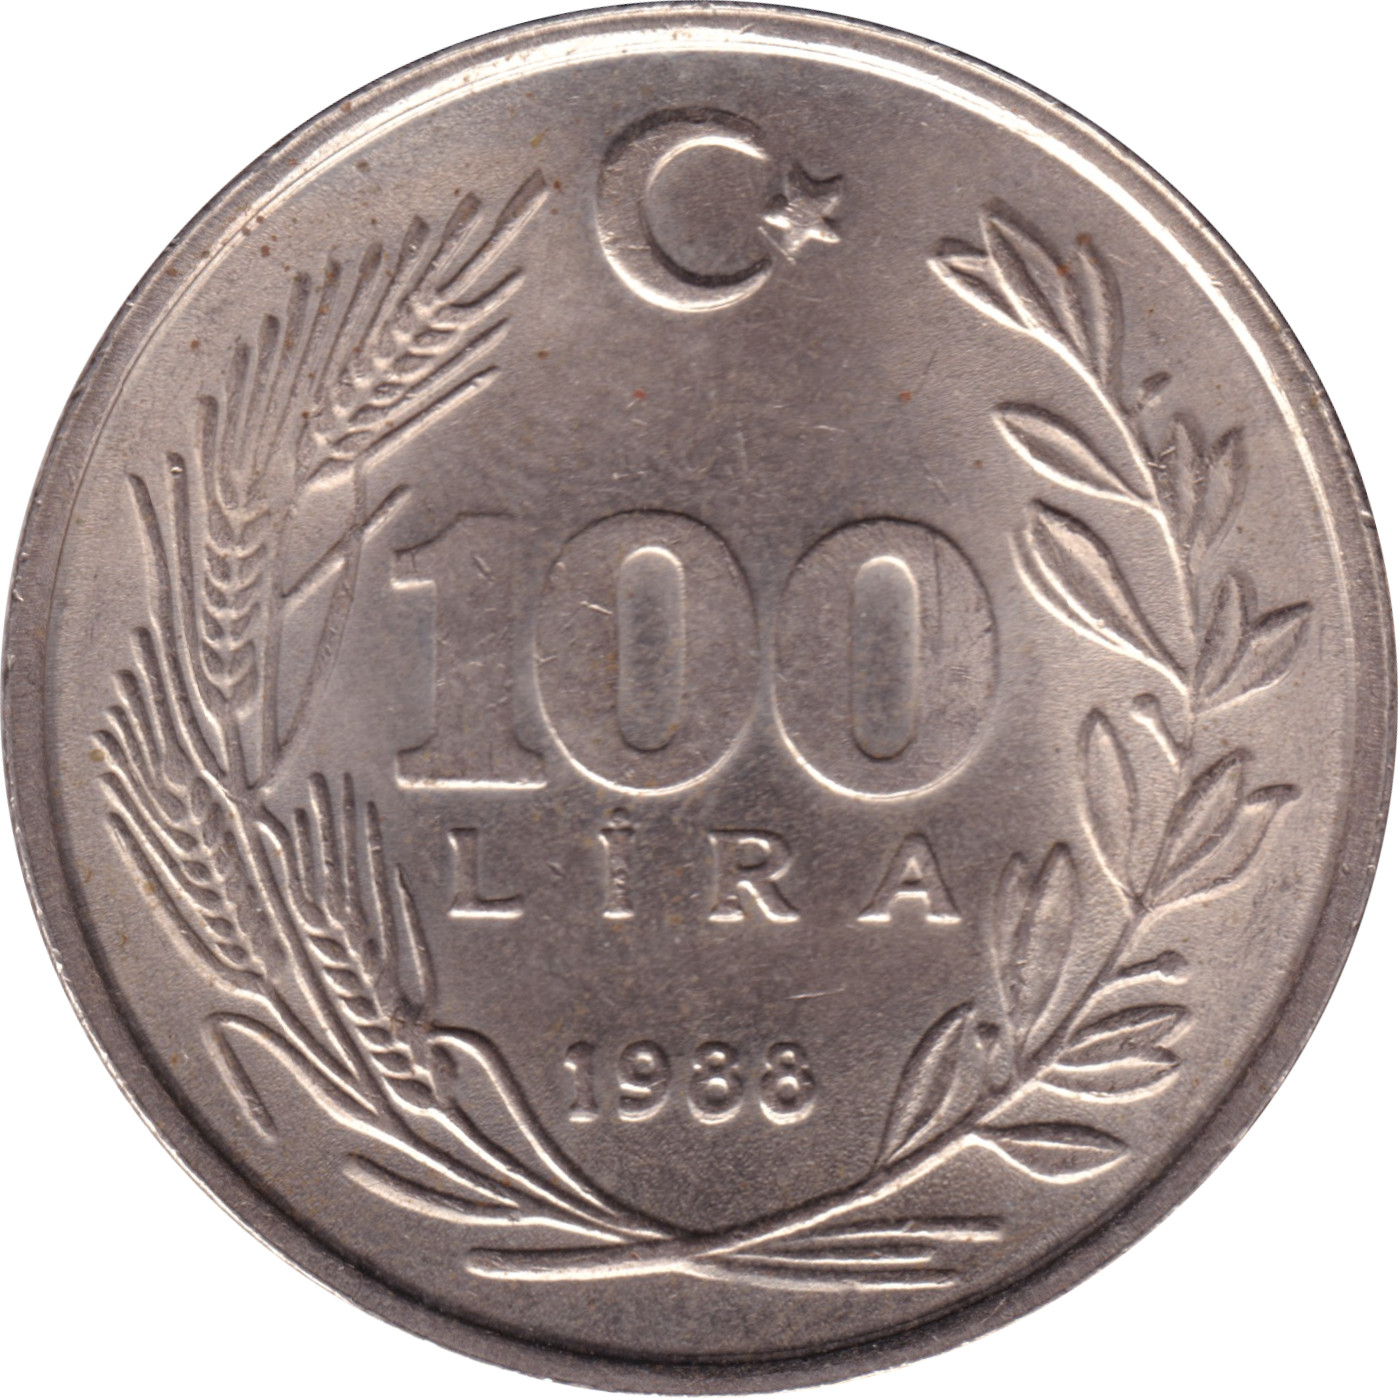 100 lira - Moustafa Kemal - Type 1